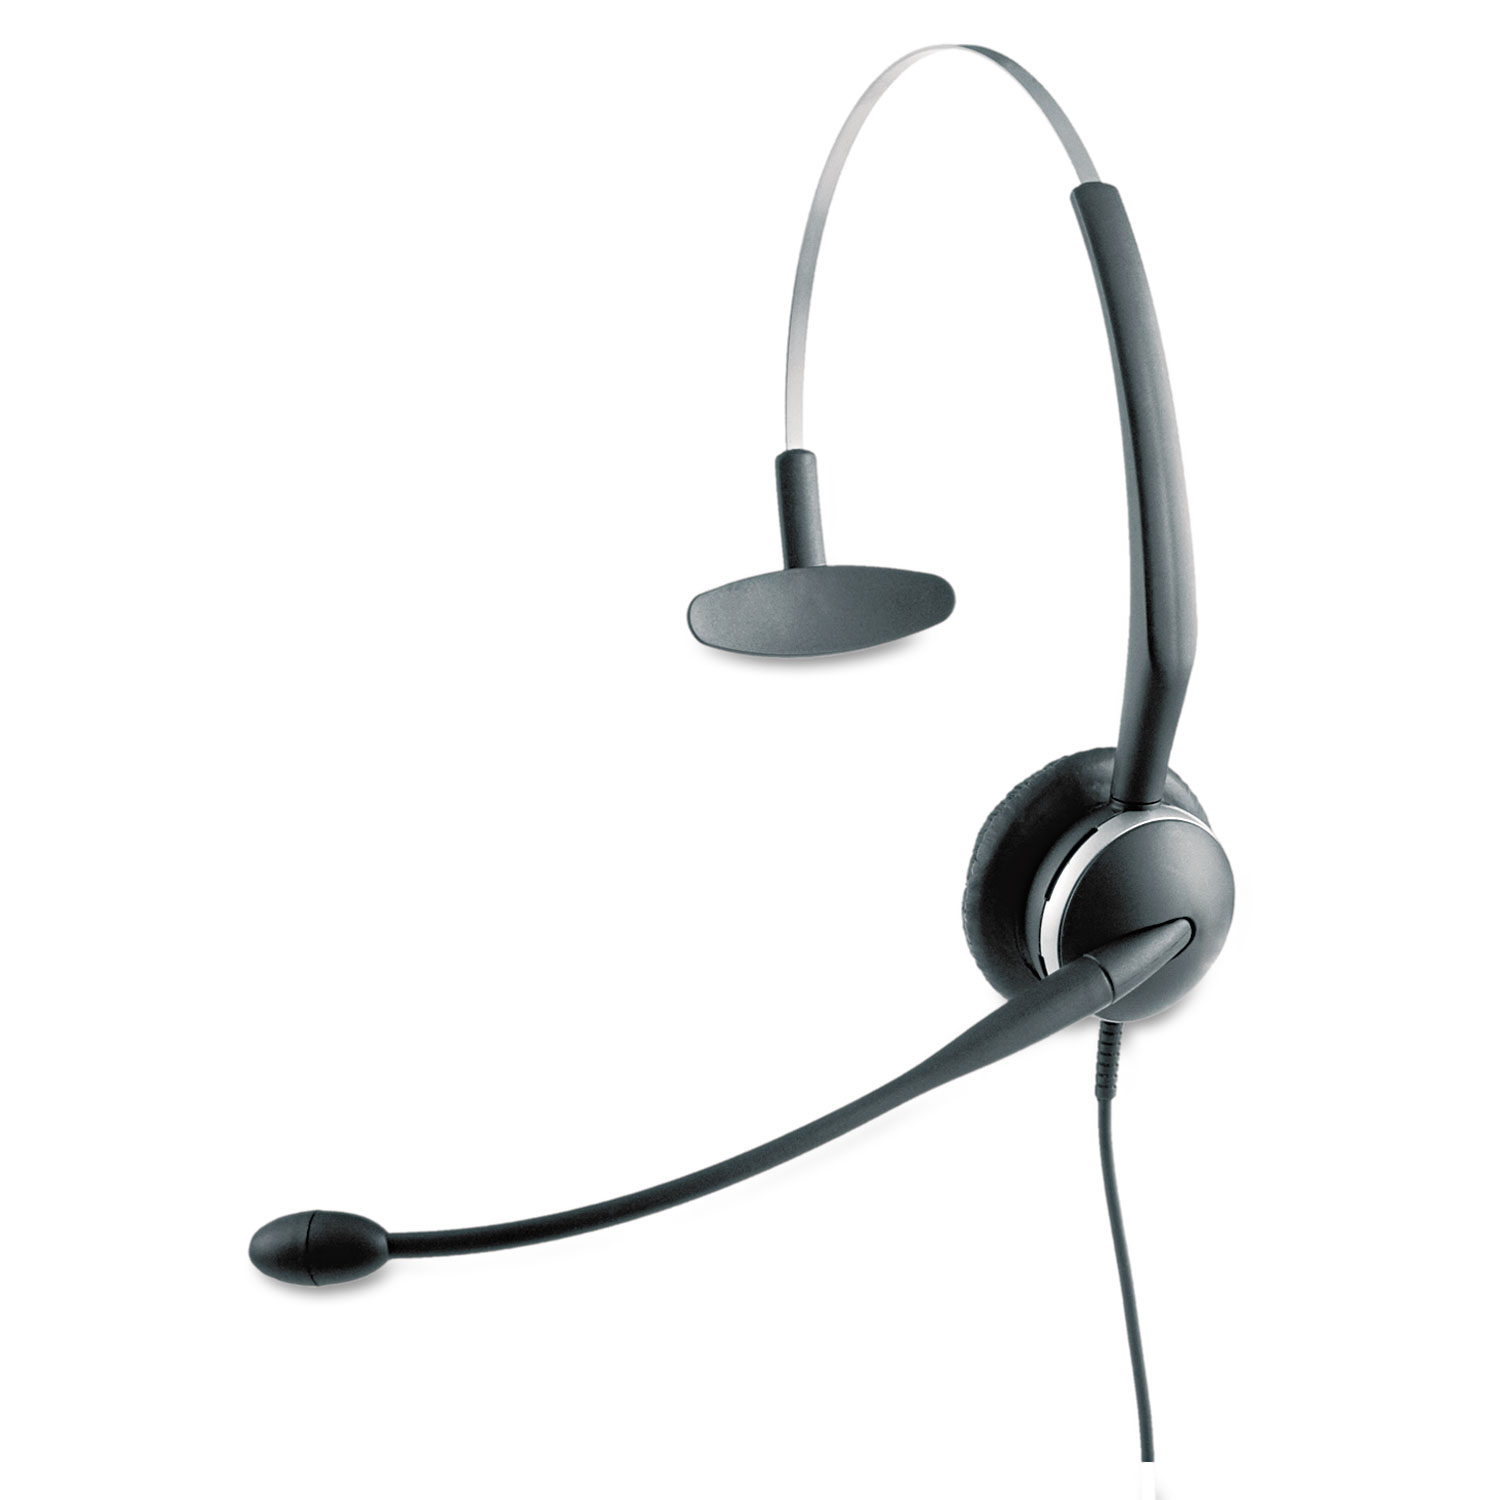  Jabra GN2124NC 4-in-1 Headset, Noise Canceling Microphone, Black (JBR2104820105) 